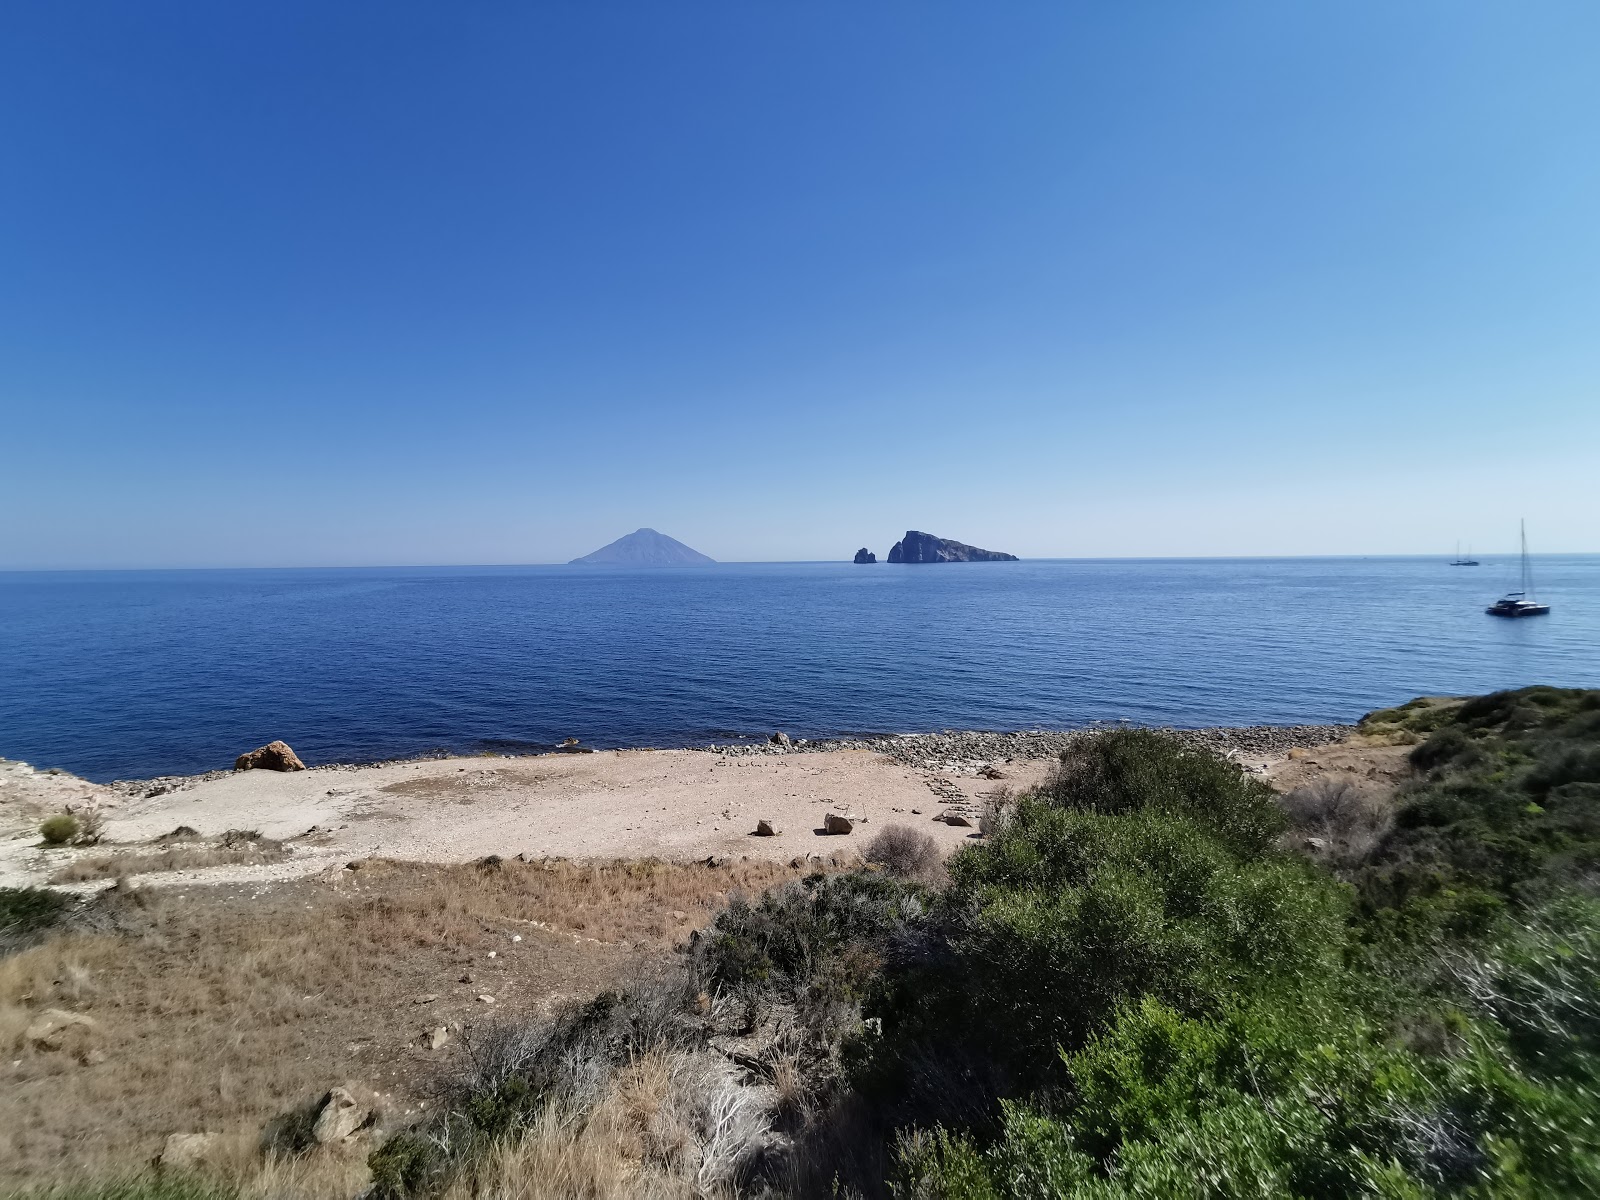 Spiaggia della Calcara'in fotoğrafı mavi saf su yüzey ile